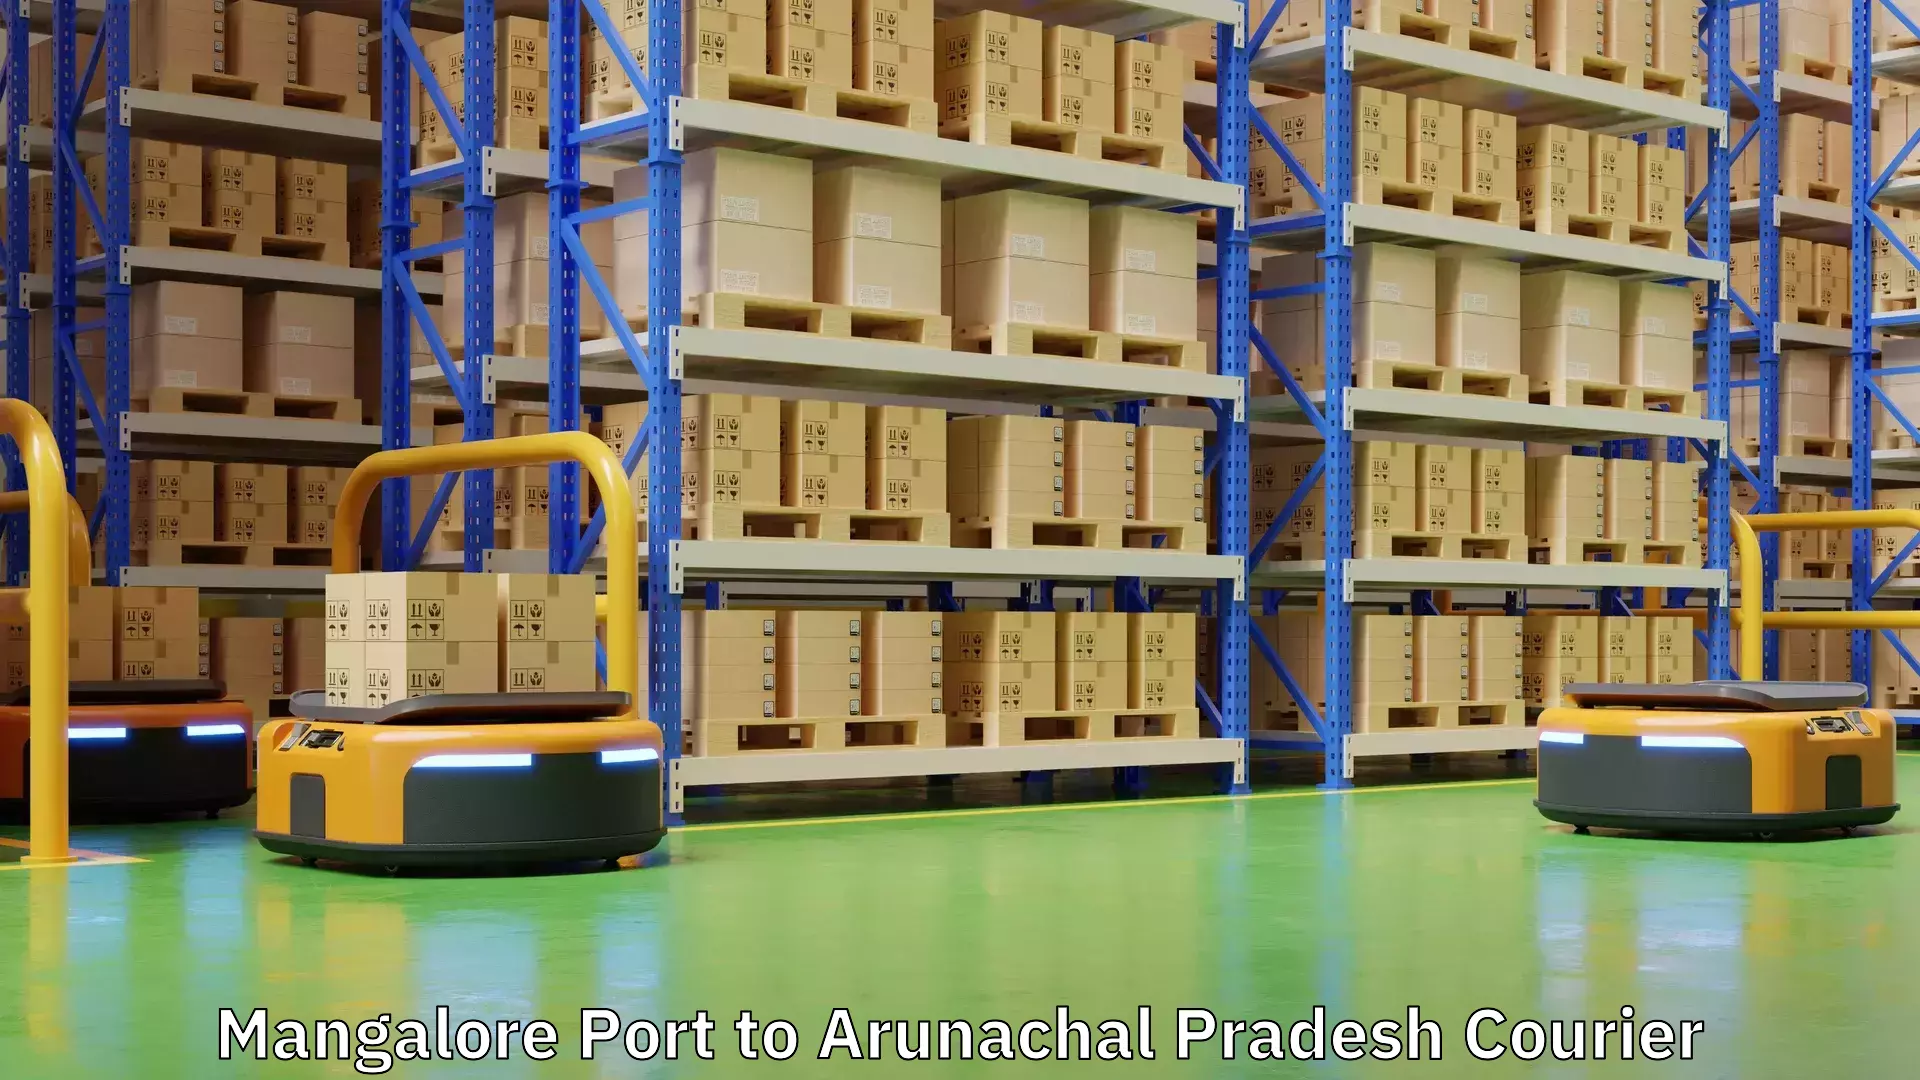 Pharmaceutical courier Mangalore Port to Arunachal Pradesh